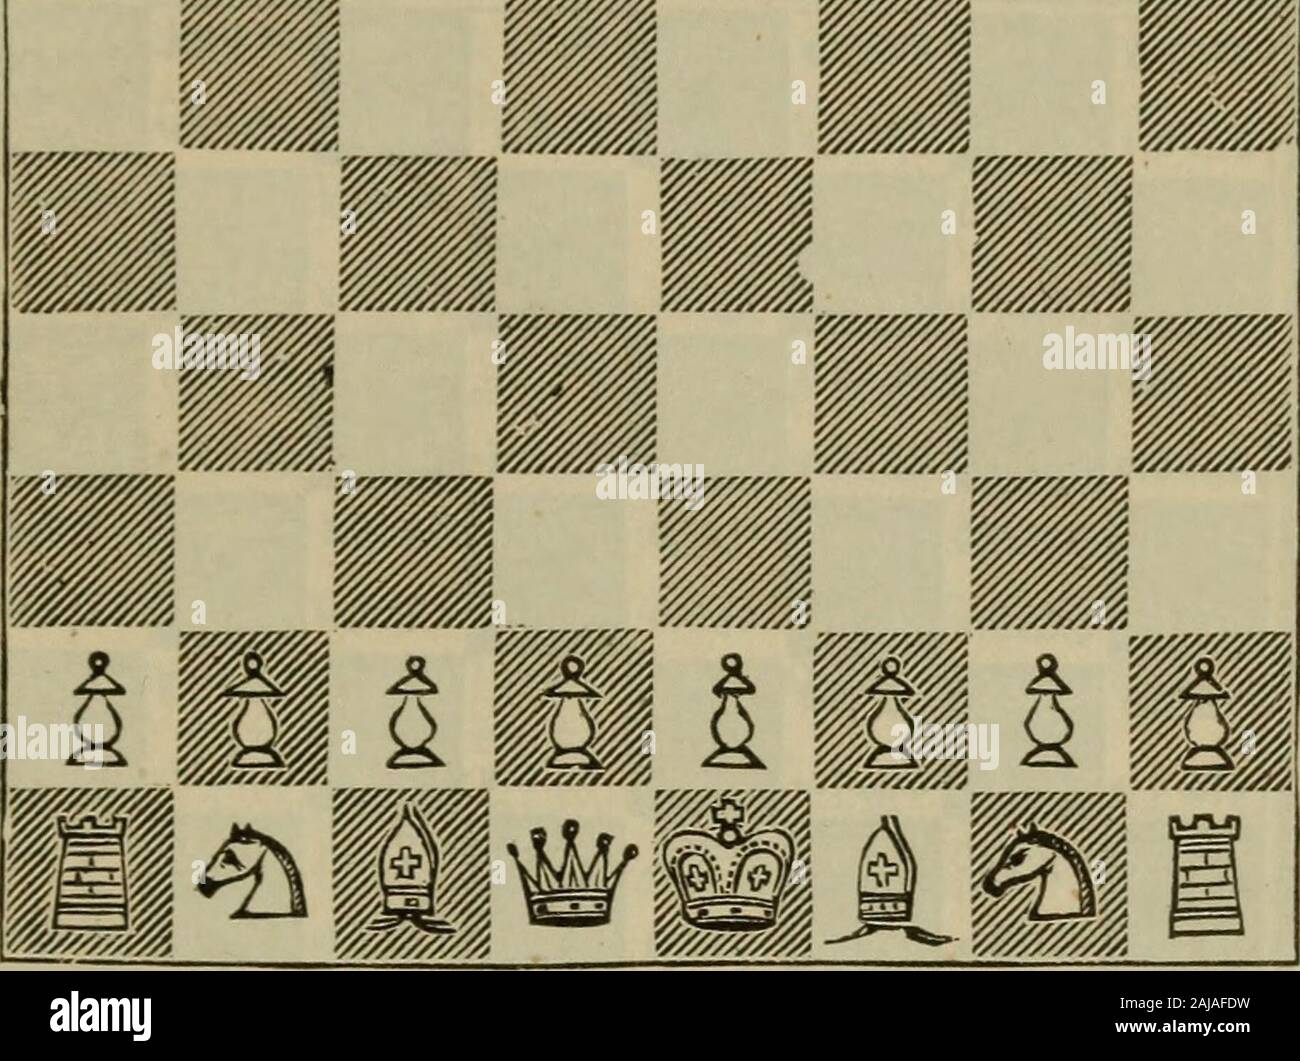 Standard Game Pawns